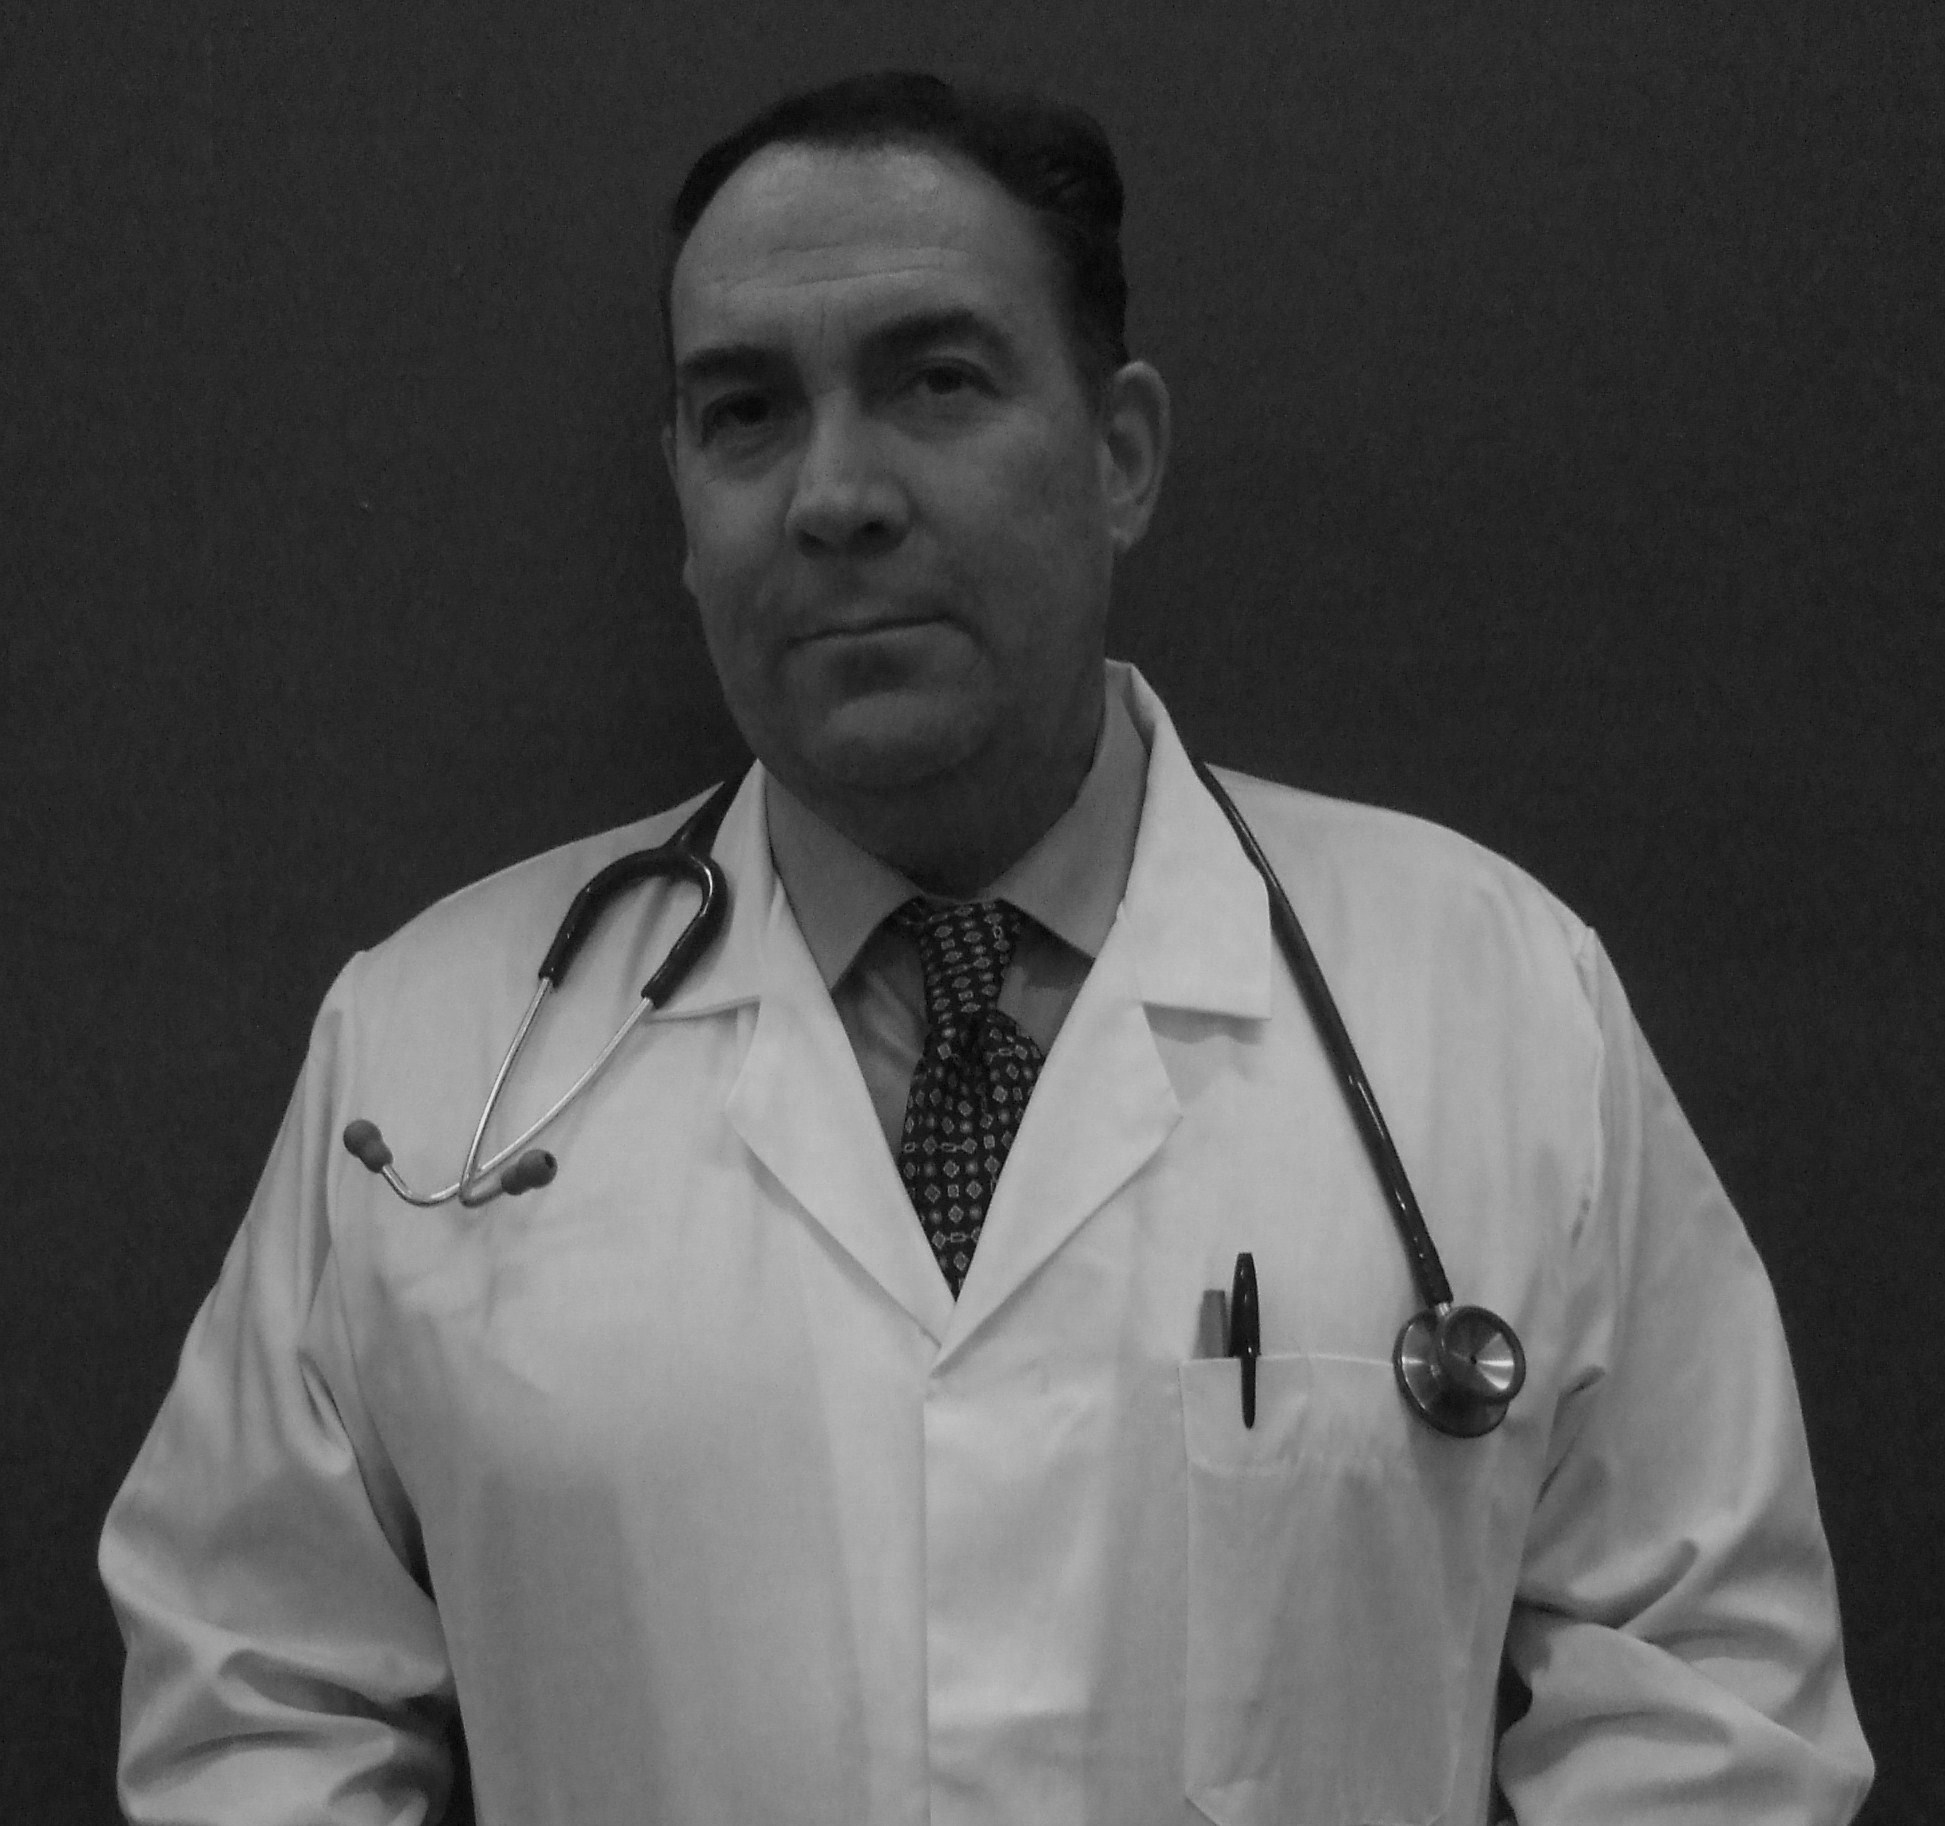 Paul Yardley as a Doctor